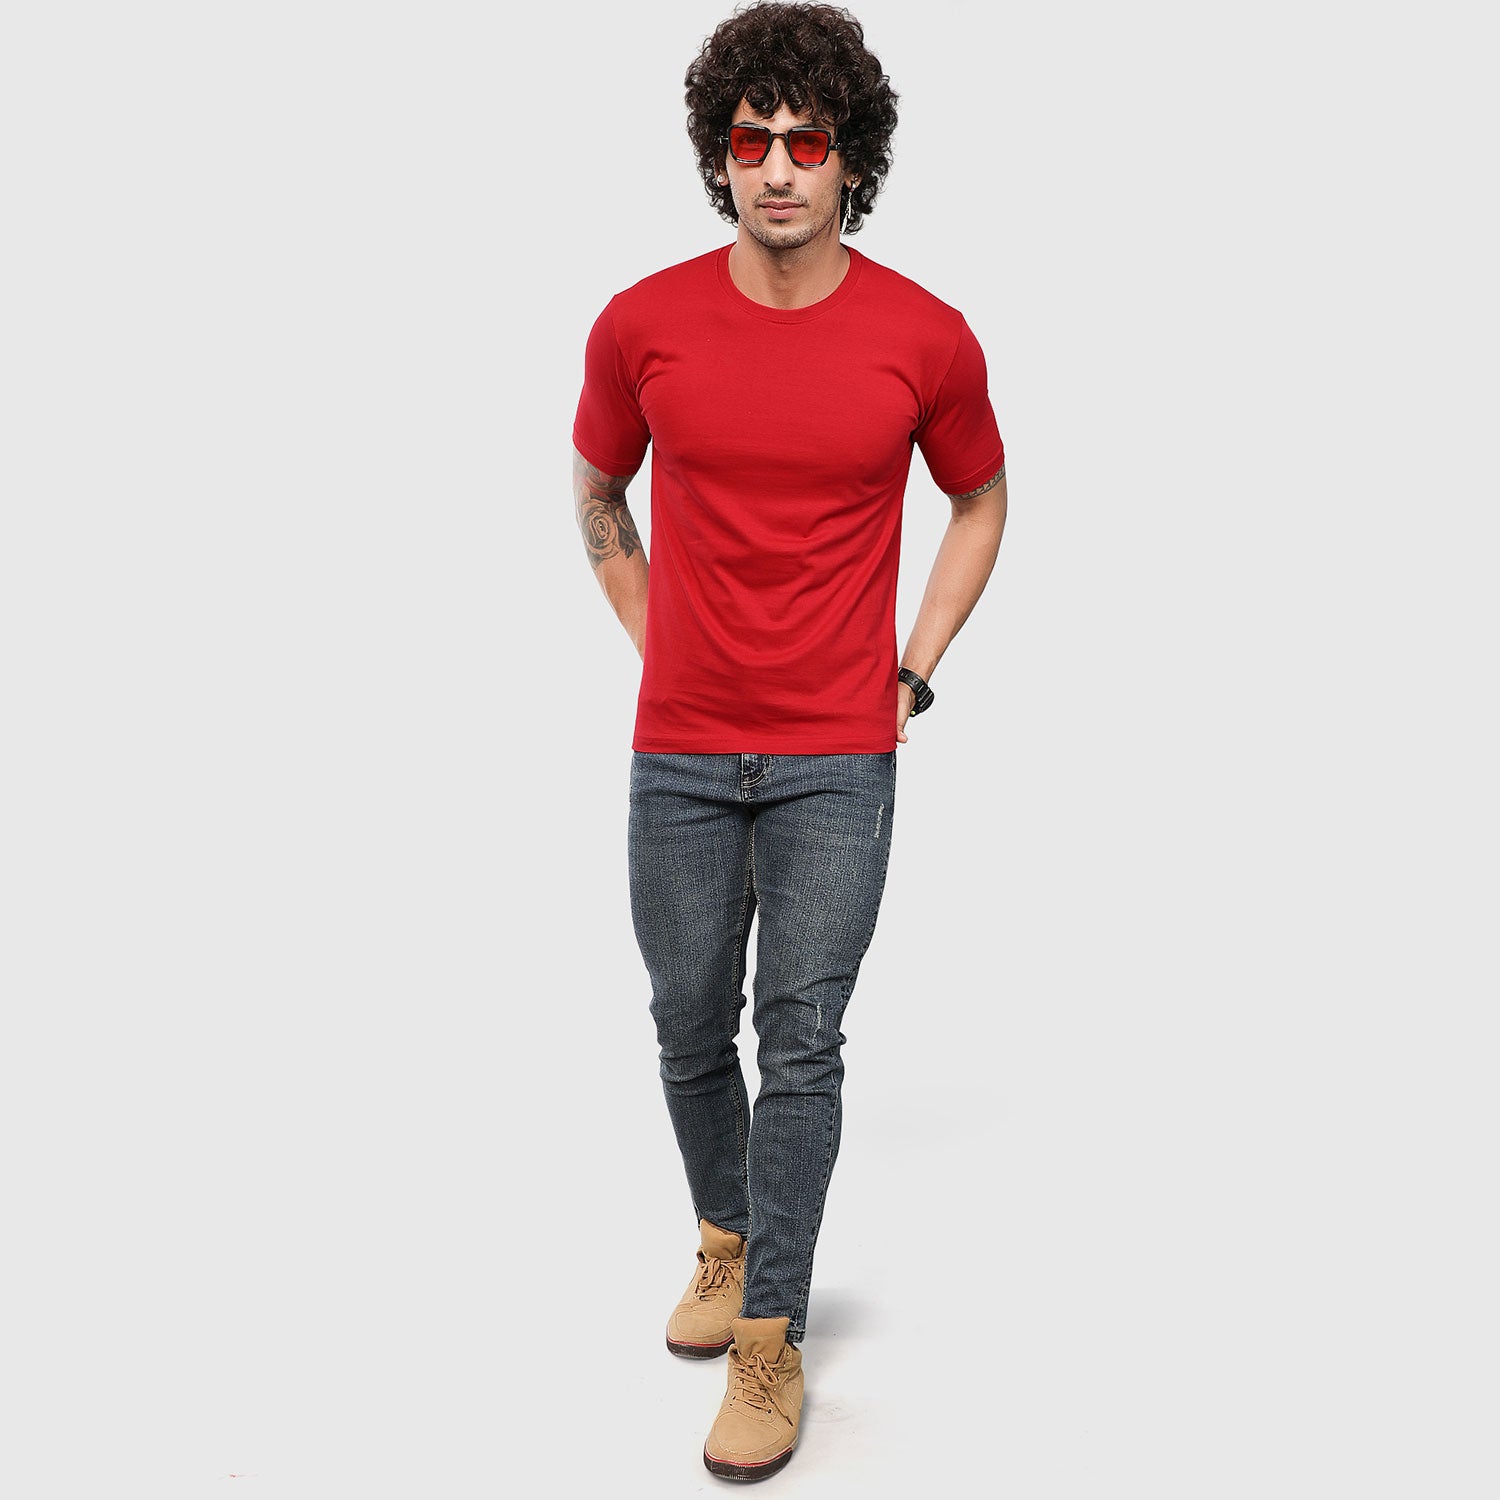 Red Plain T-shirt